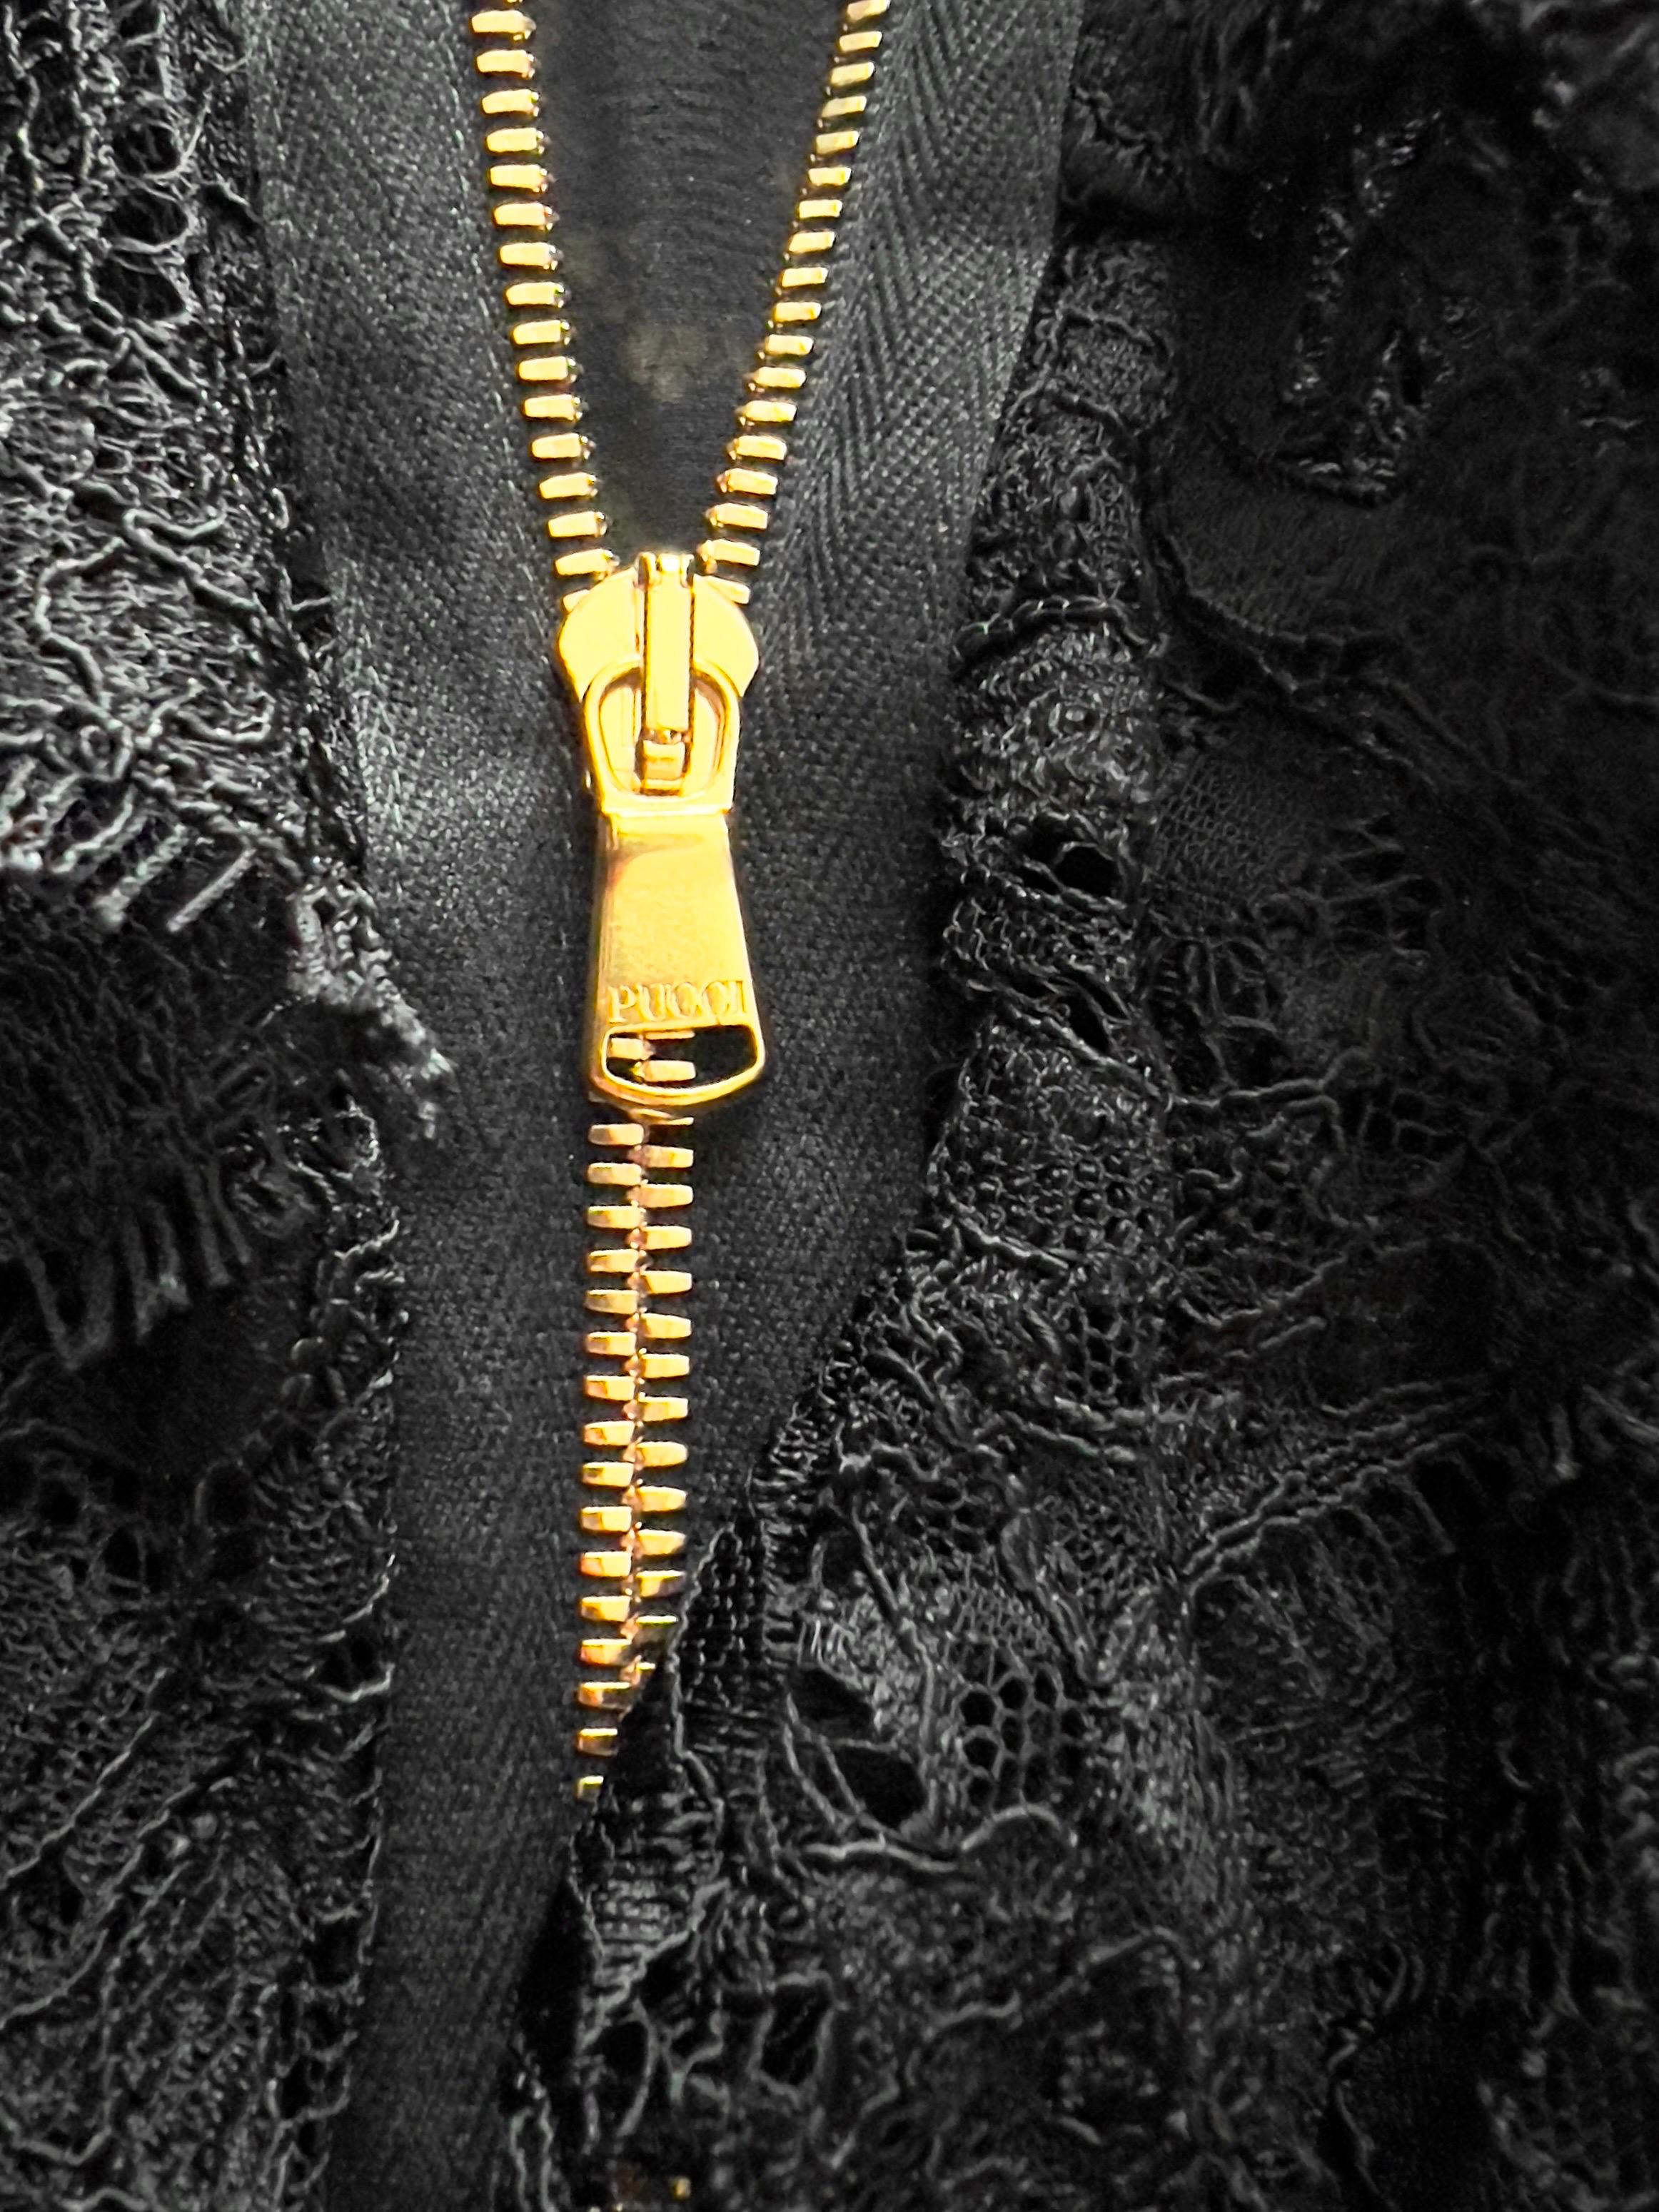 UNWORN Emilio Pucci by Peter Dundas Black Belted Lace Dress Zipper Detail 42 For Sale 3